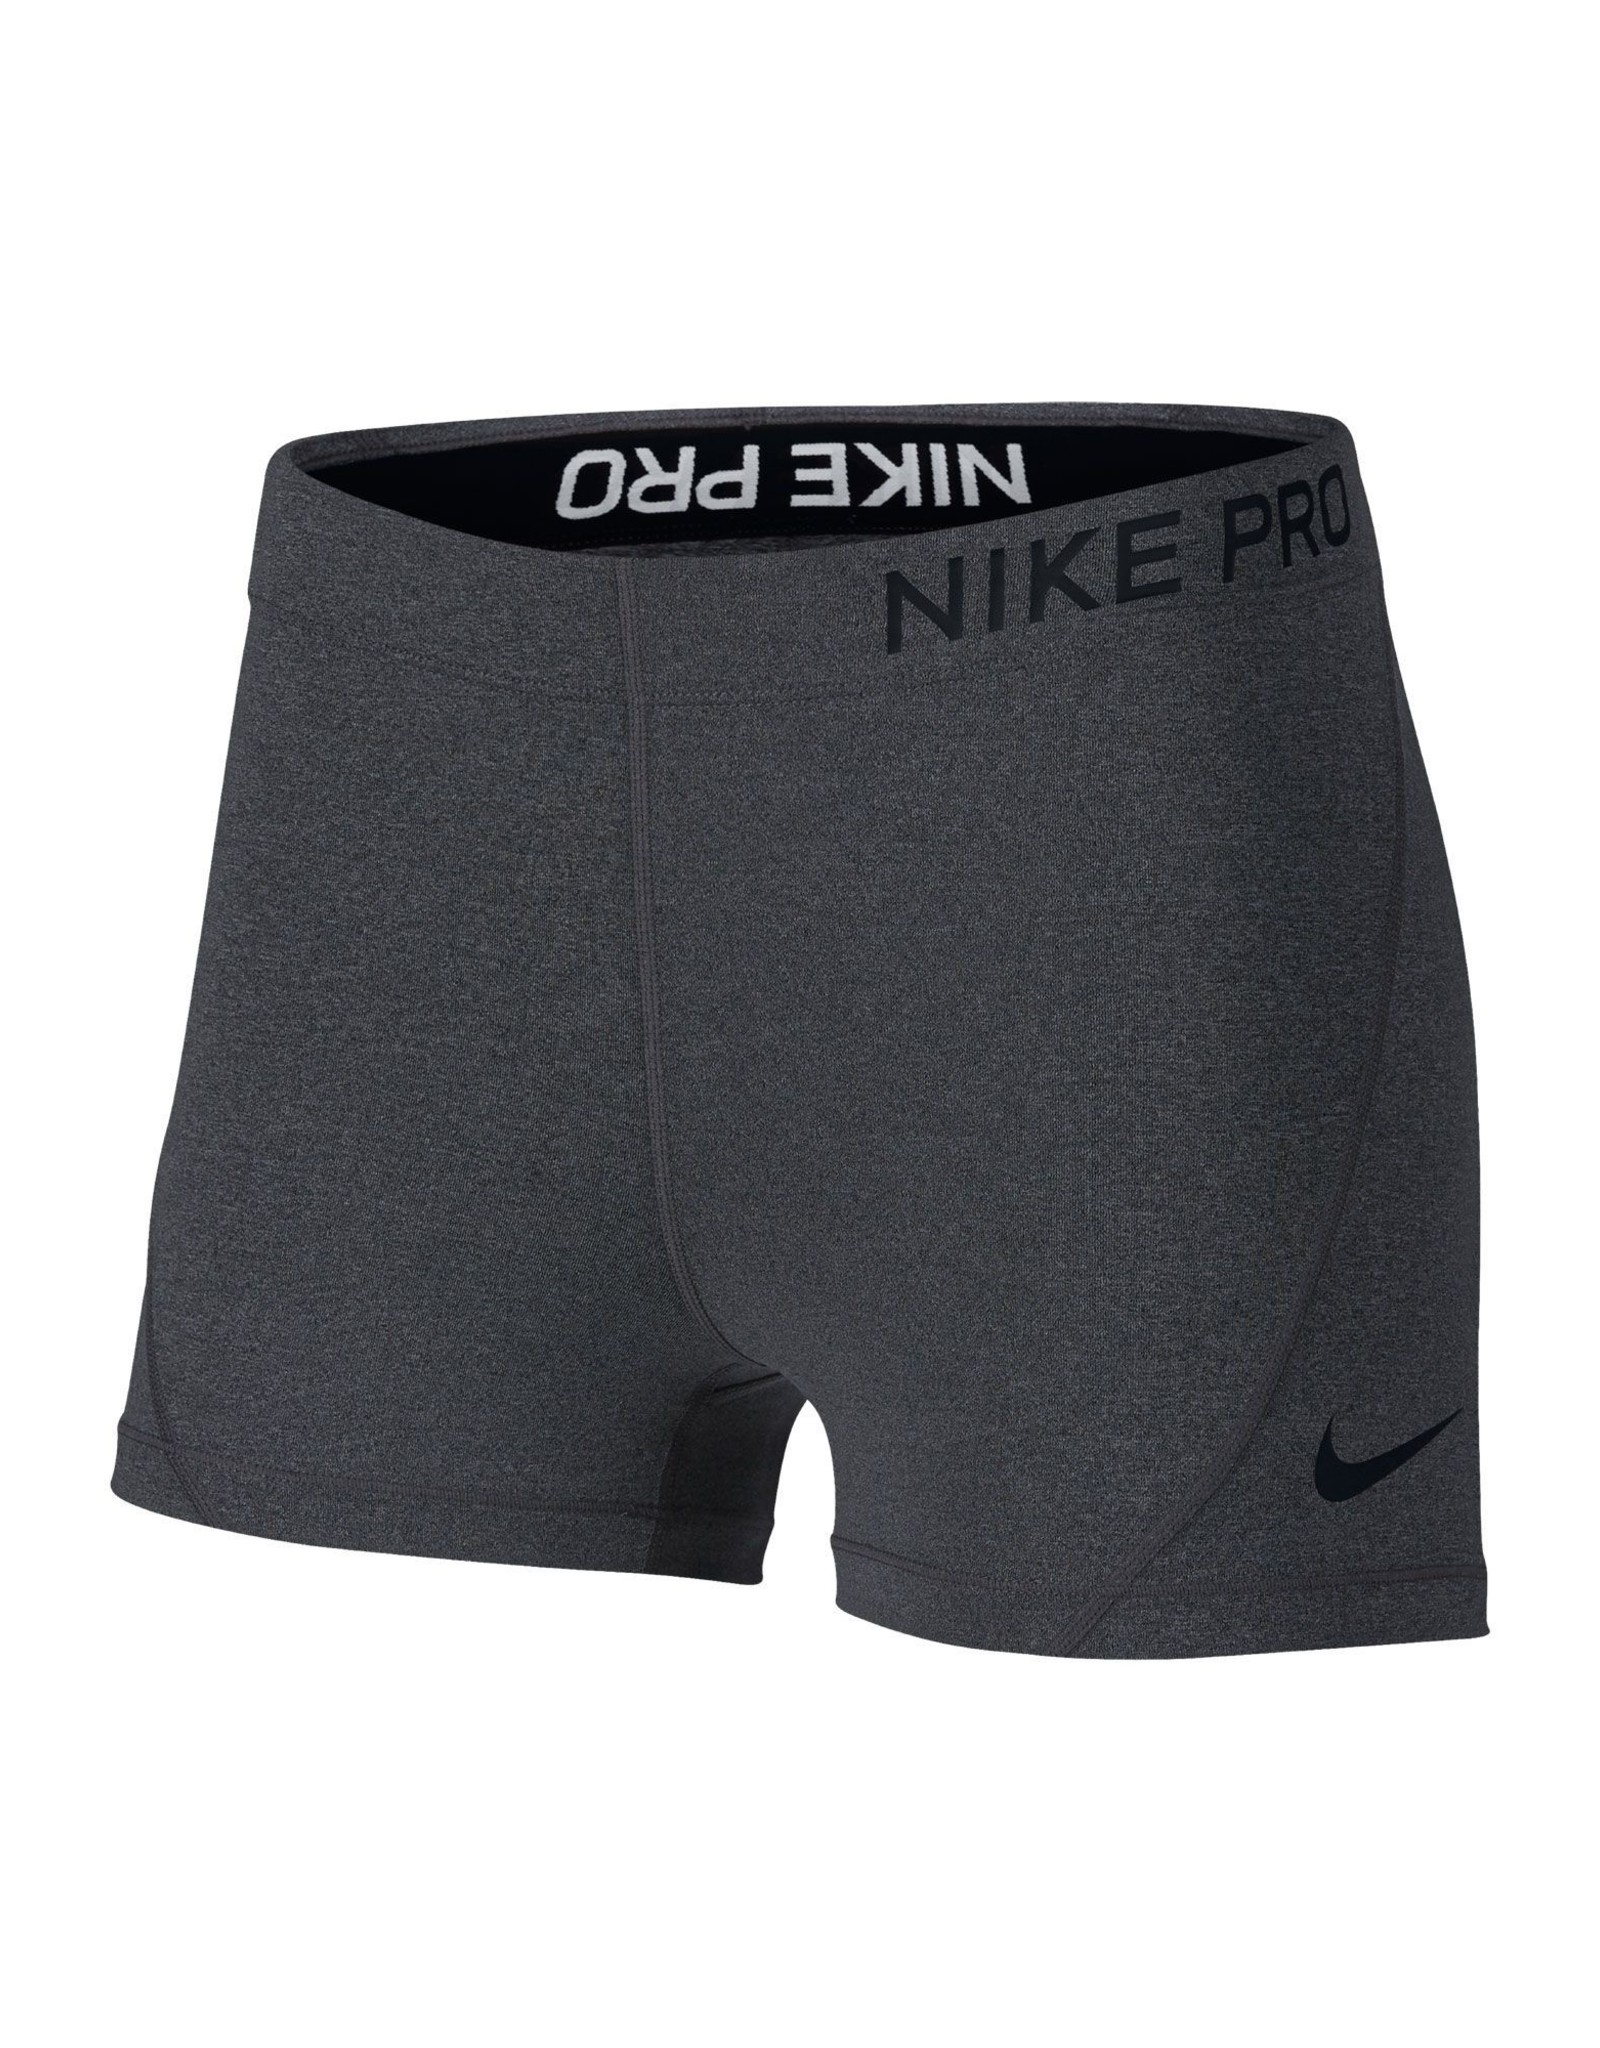 Nike Pro Charcoal Shorts